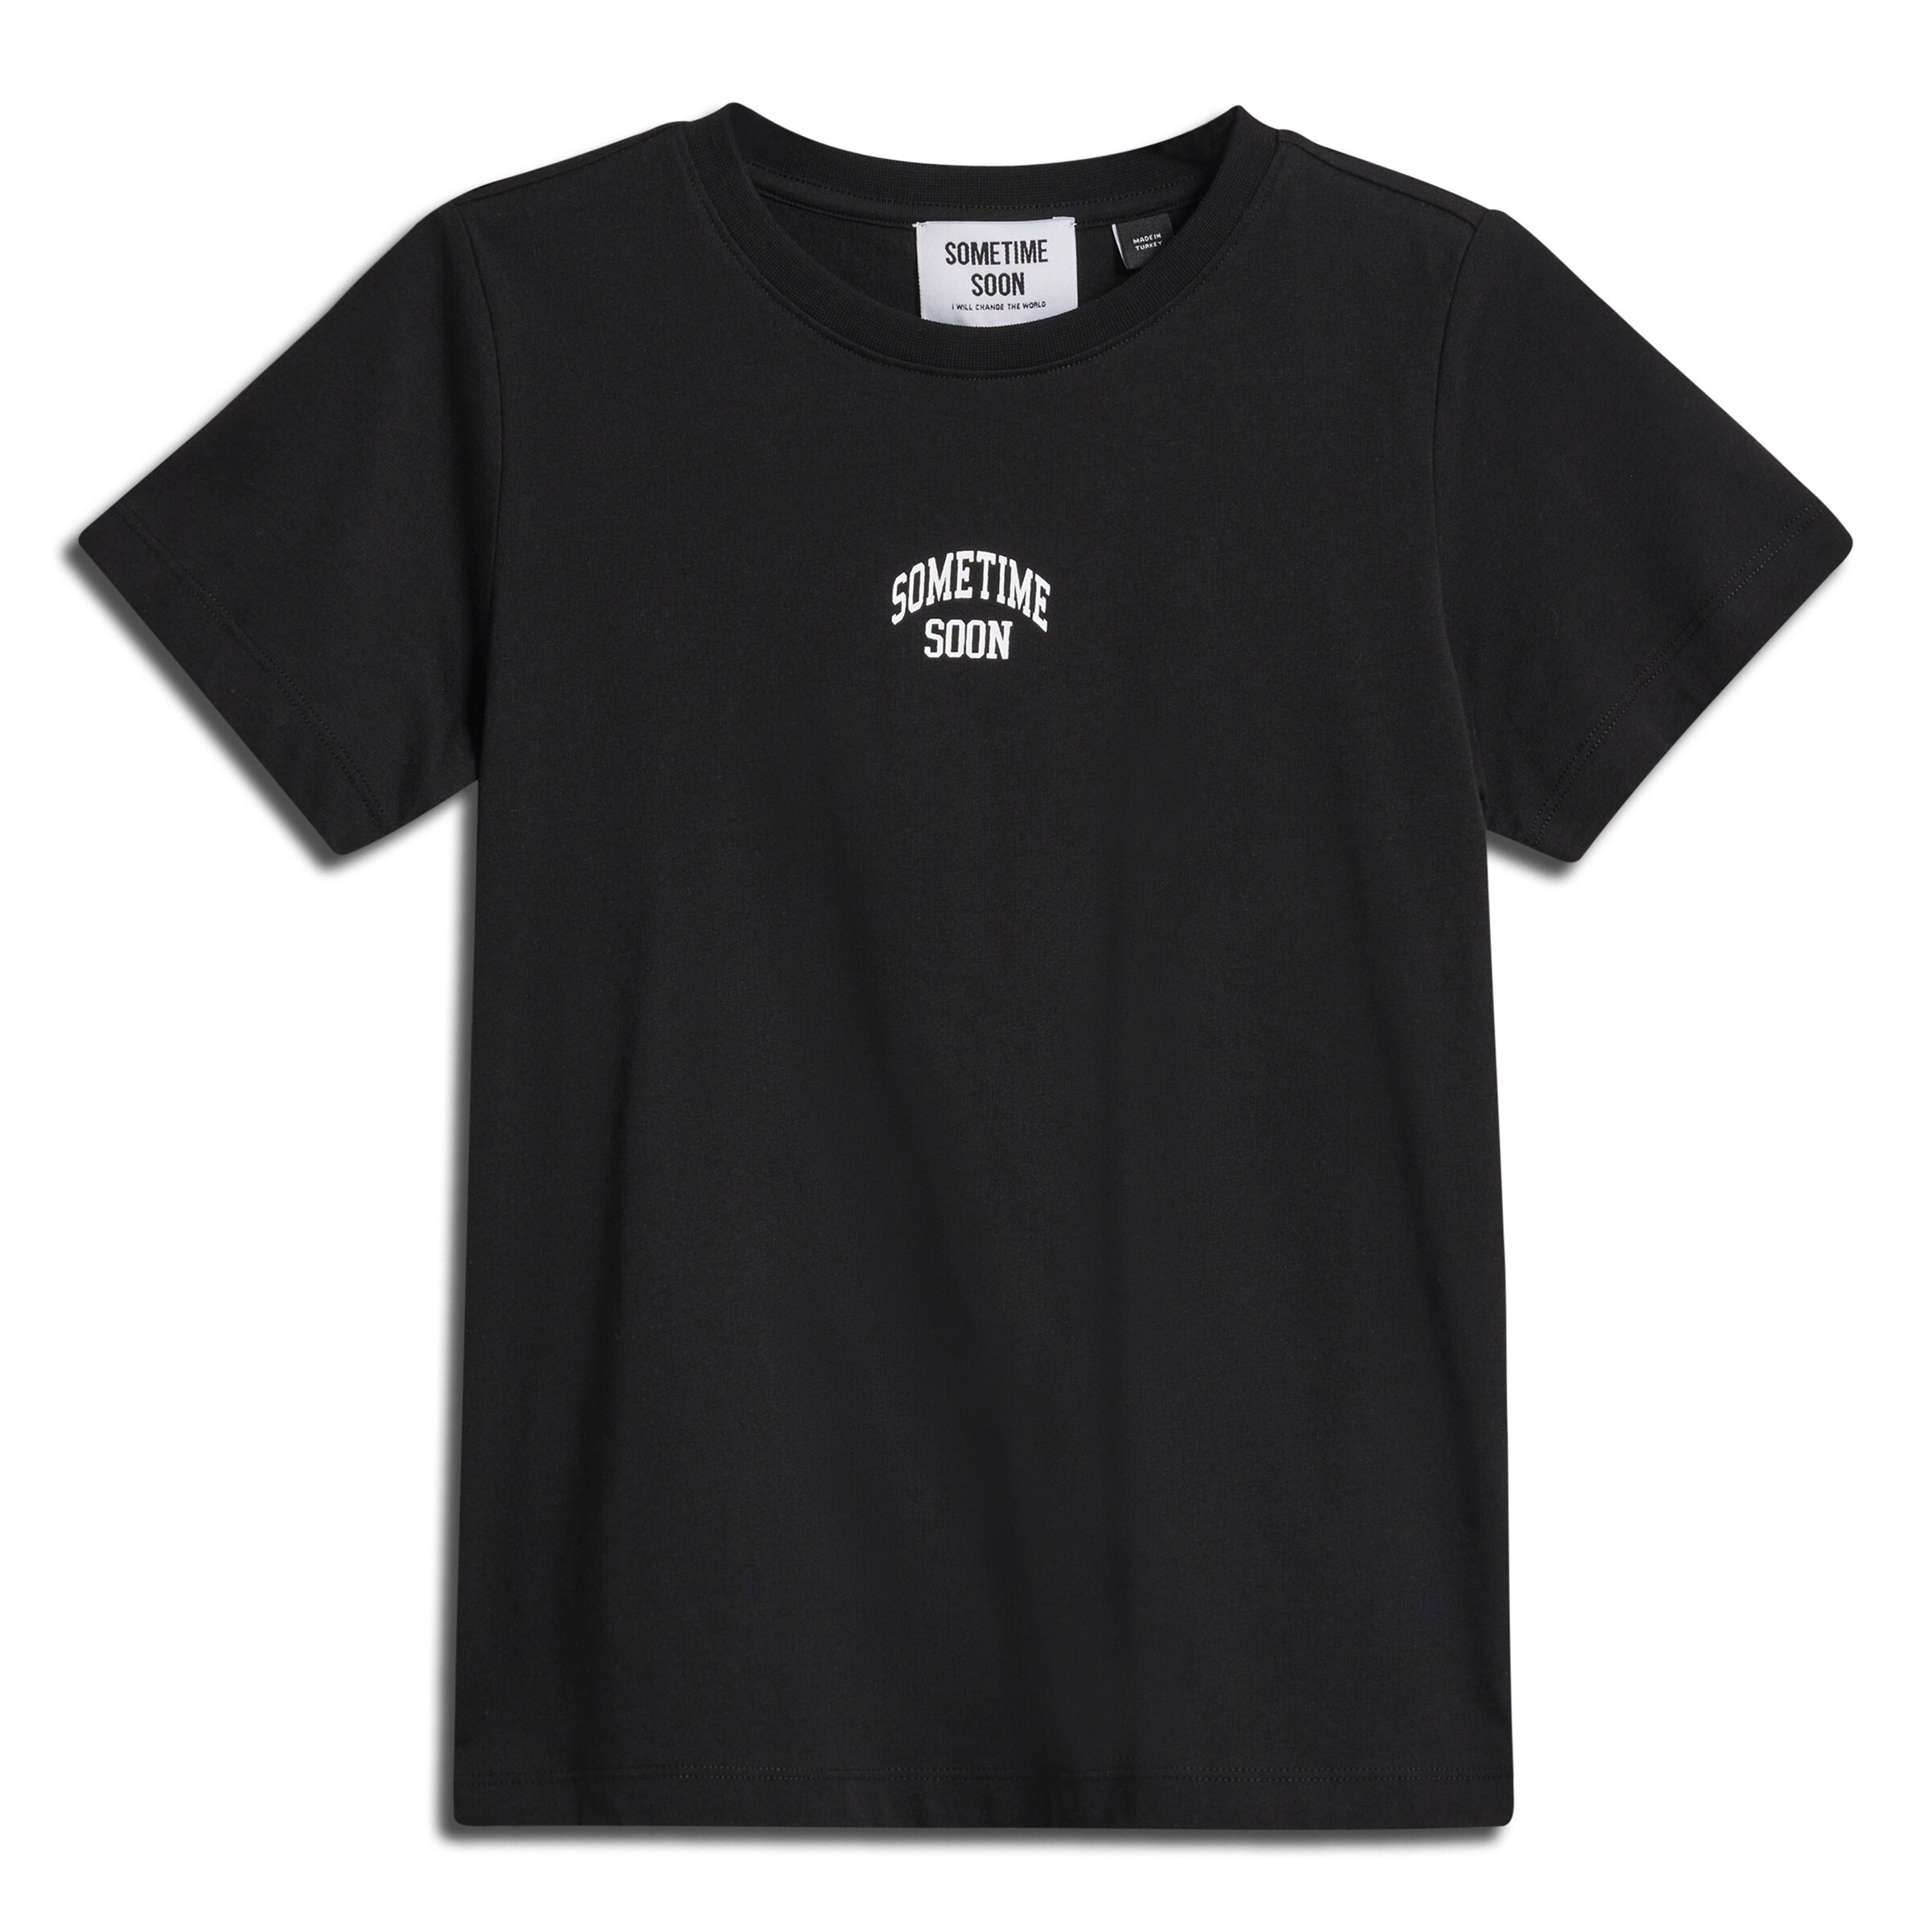 Sometime Soon T-Shirt 'empower' 104 Noir